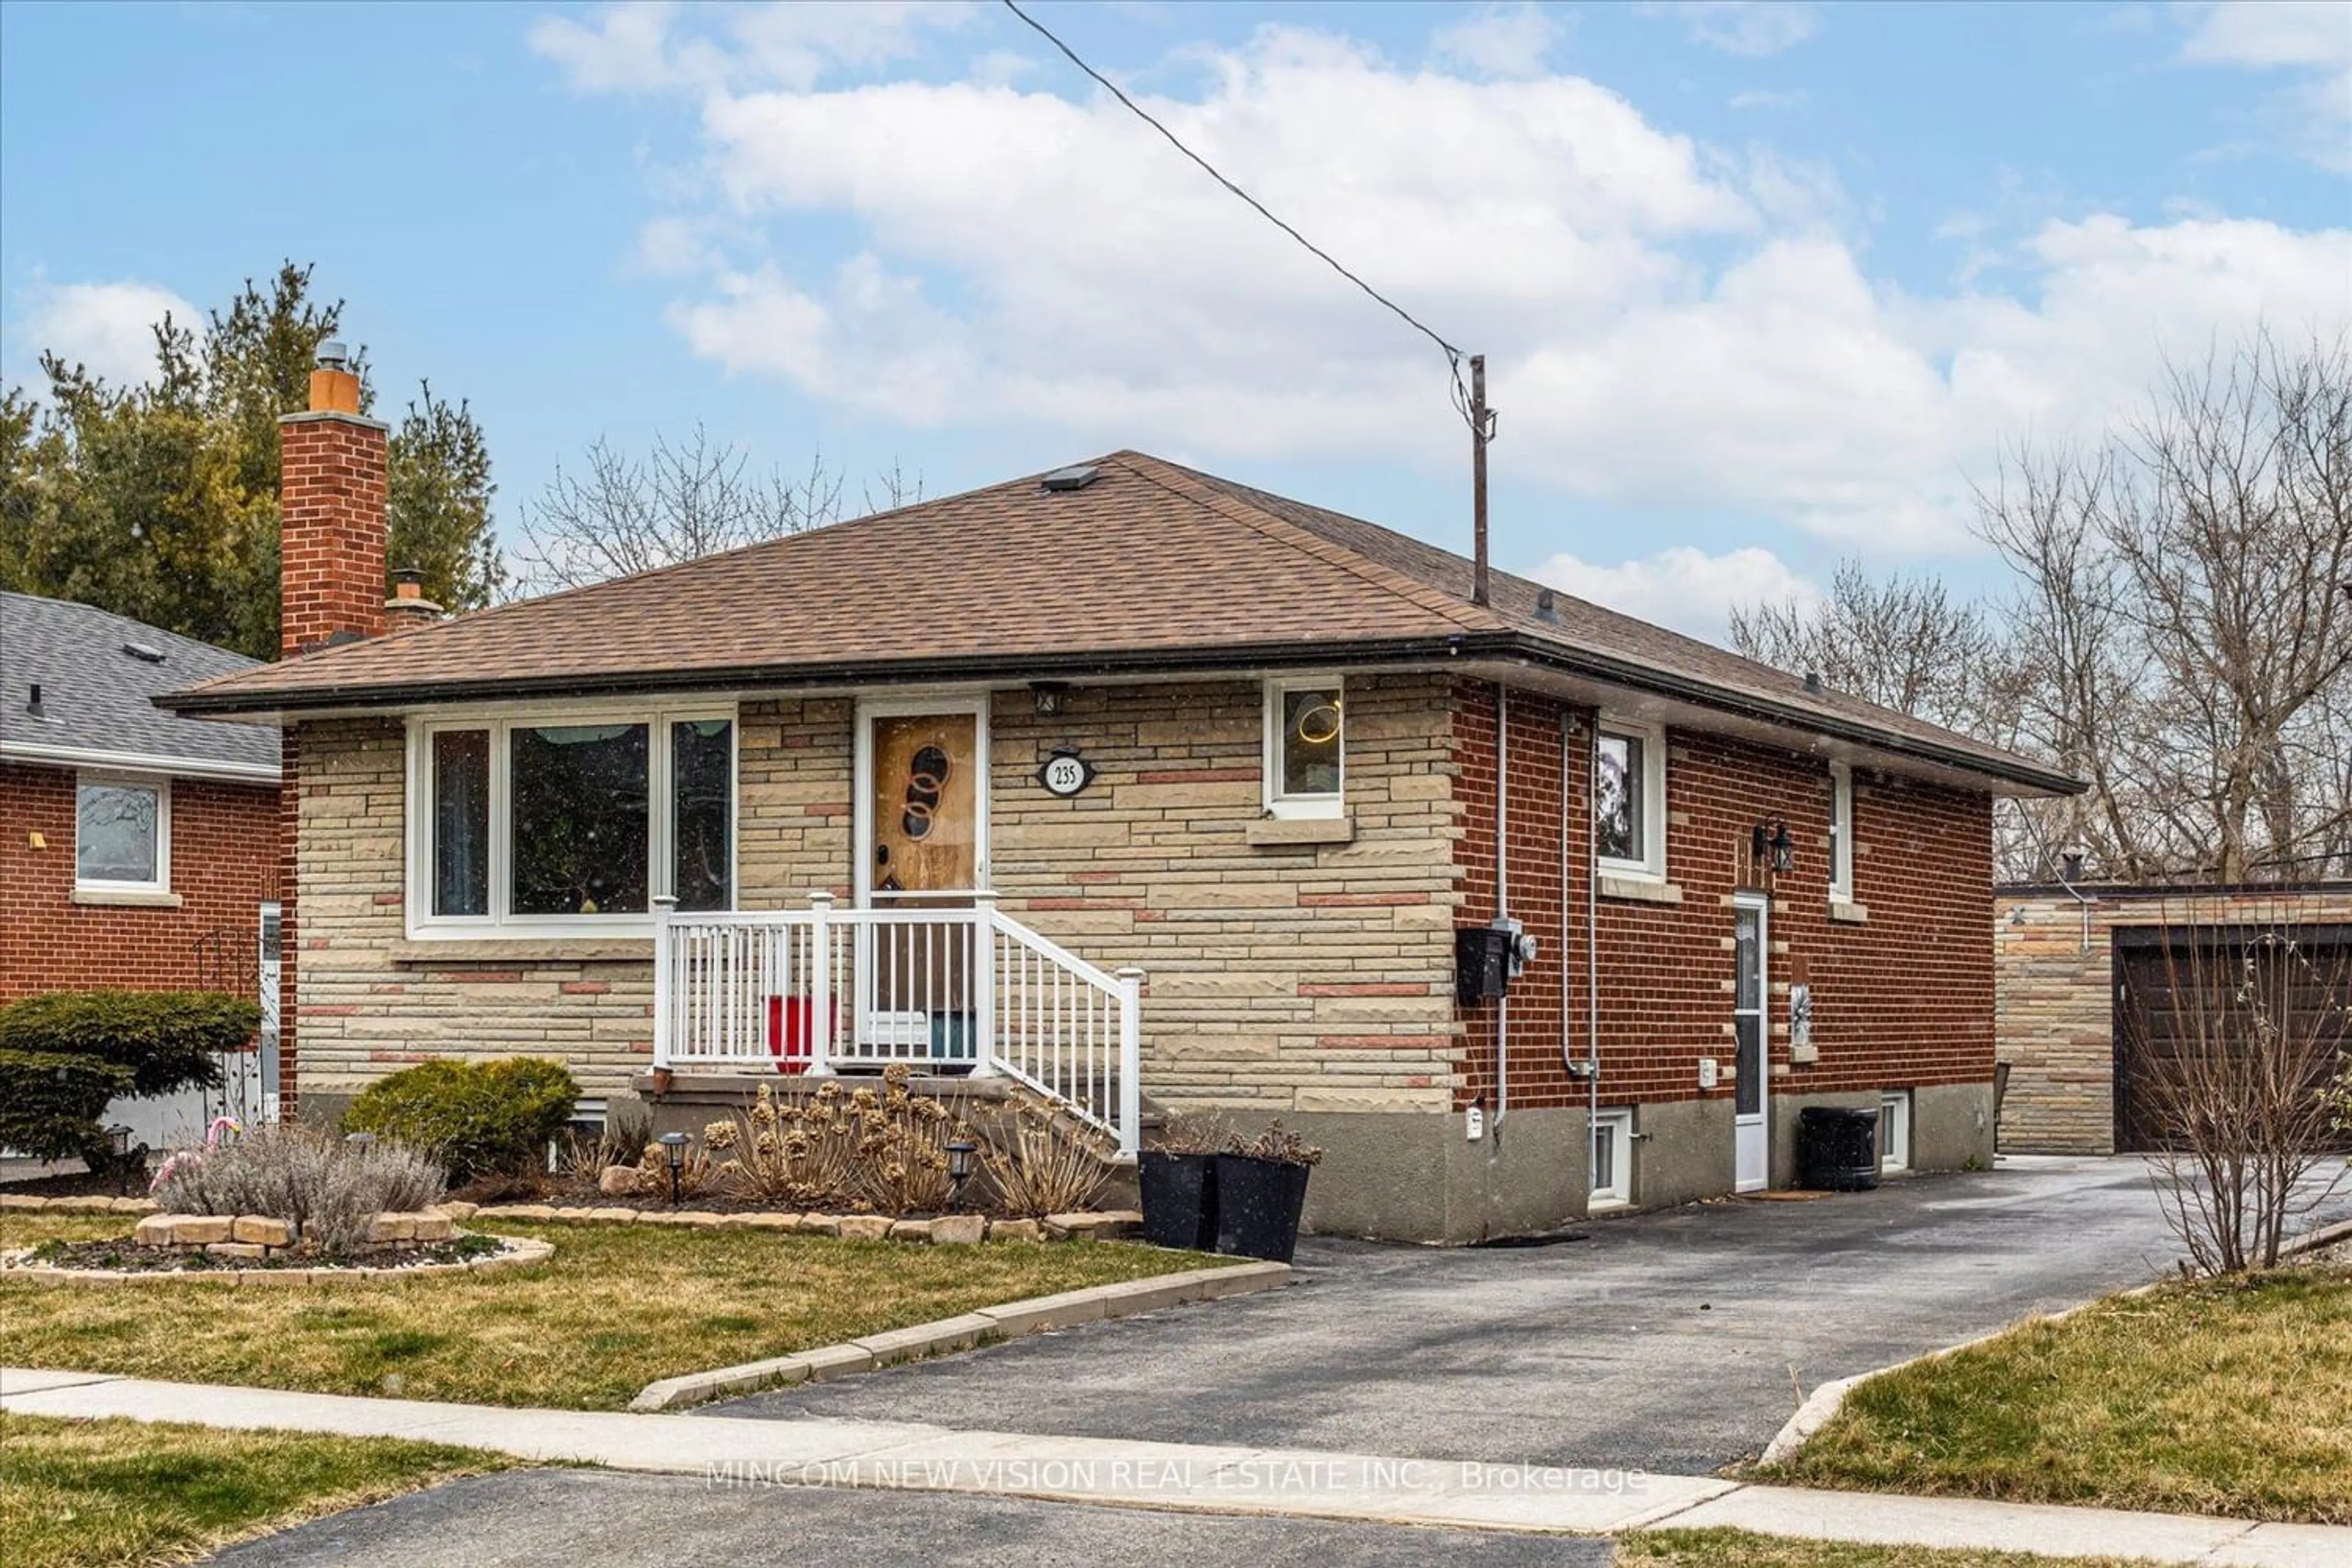 Home with brick exterior material for 235 Chadburn St, Oshawa Ontario L1H 5V5